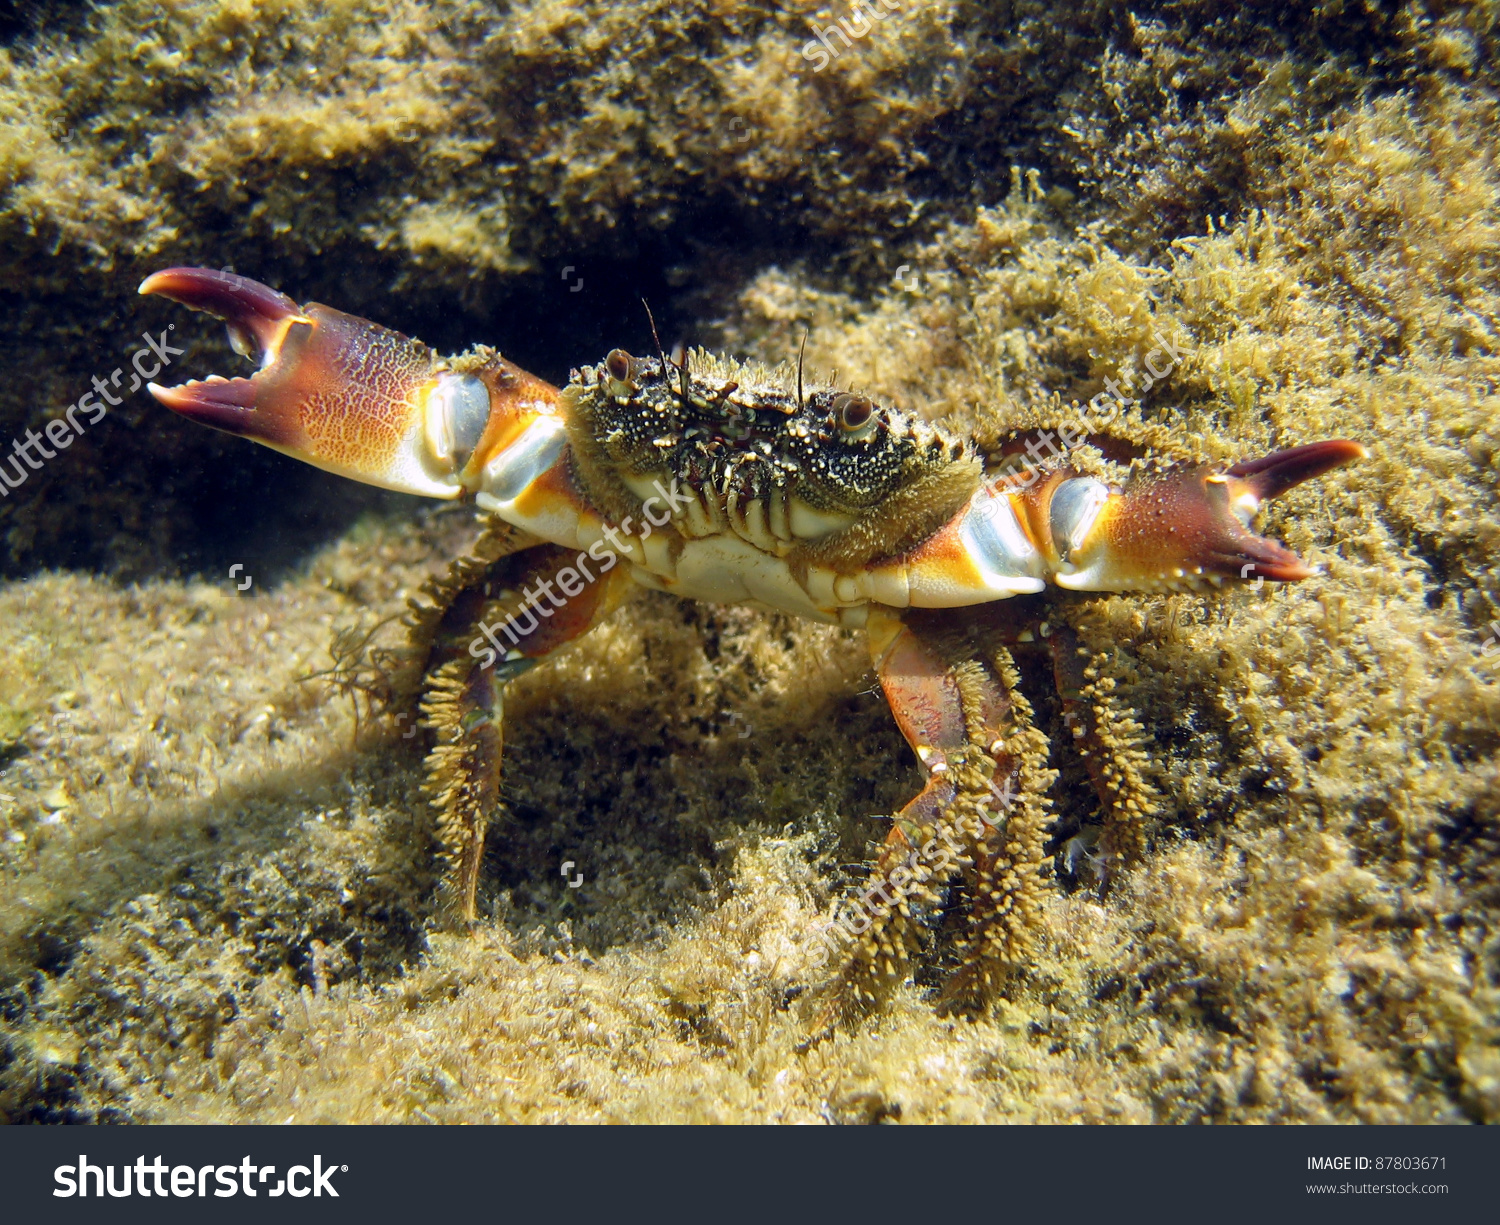 Underwater View Of Warty Crab, Eriphia Verrucosa, On Defensive.